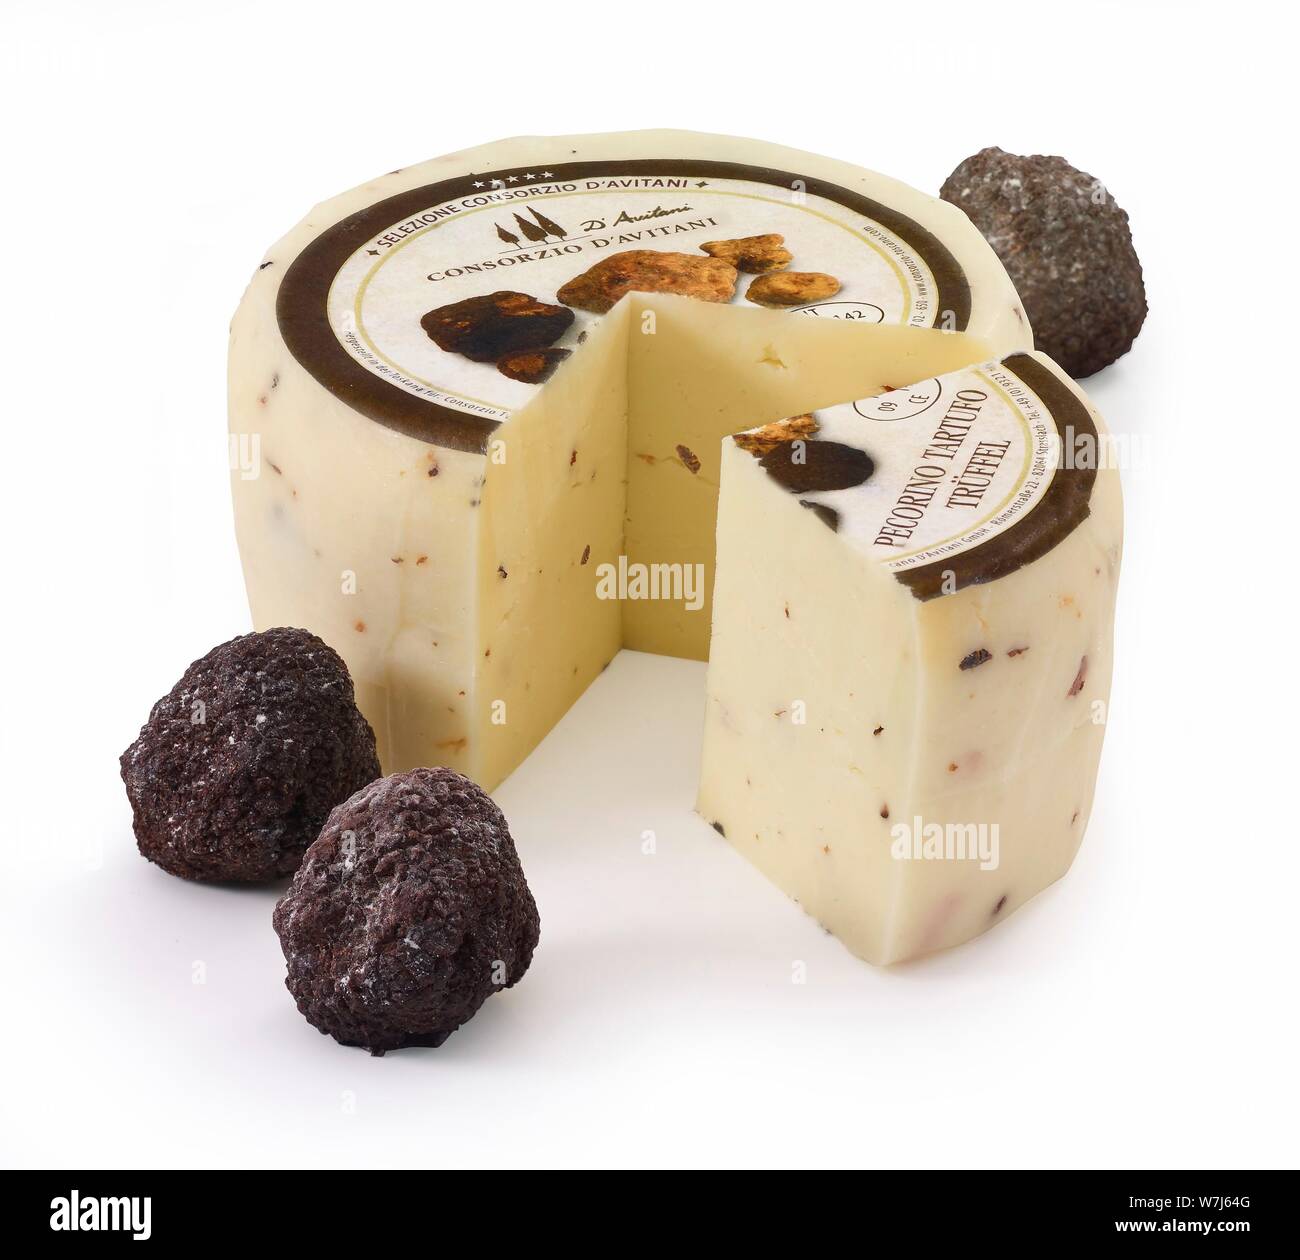 Pecorino Tartufo, cheese, with whole truffles as decoration, cutout, Germany Stock Photo